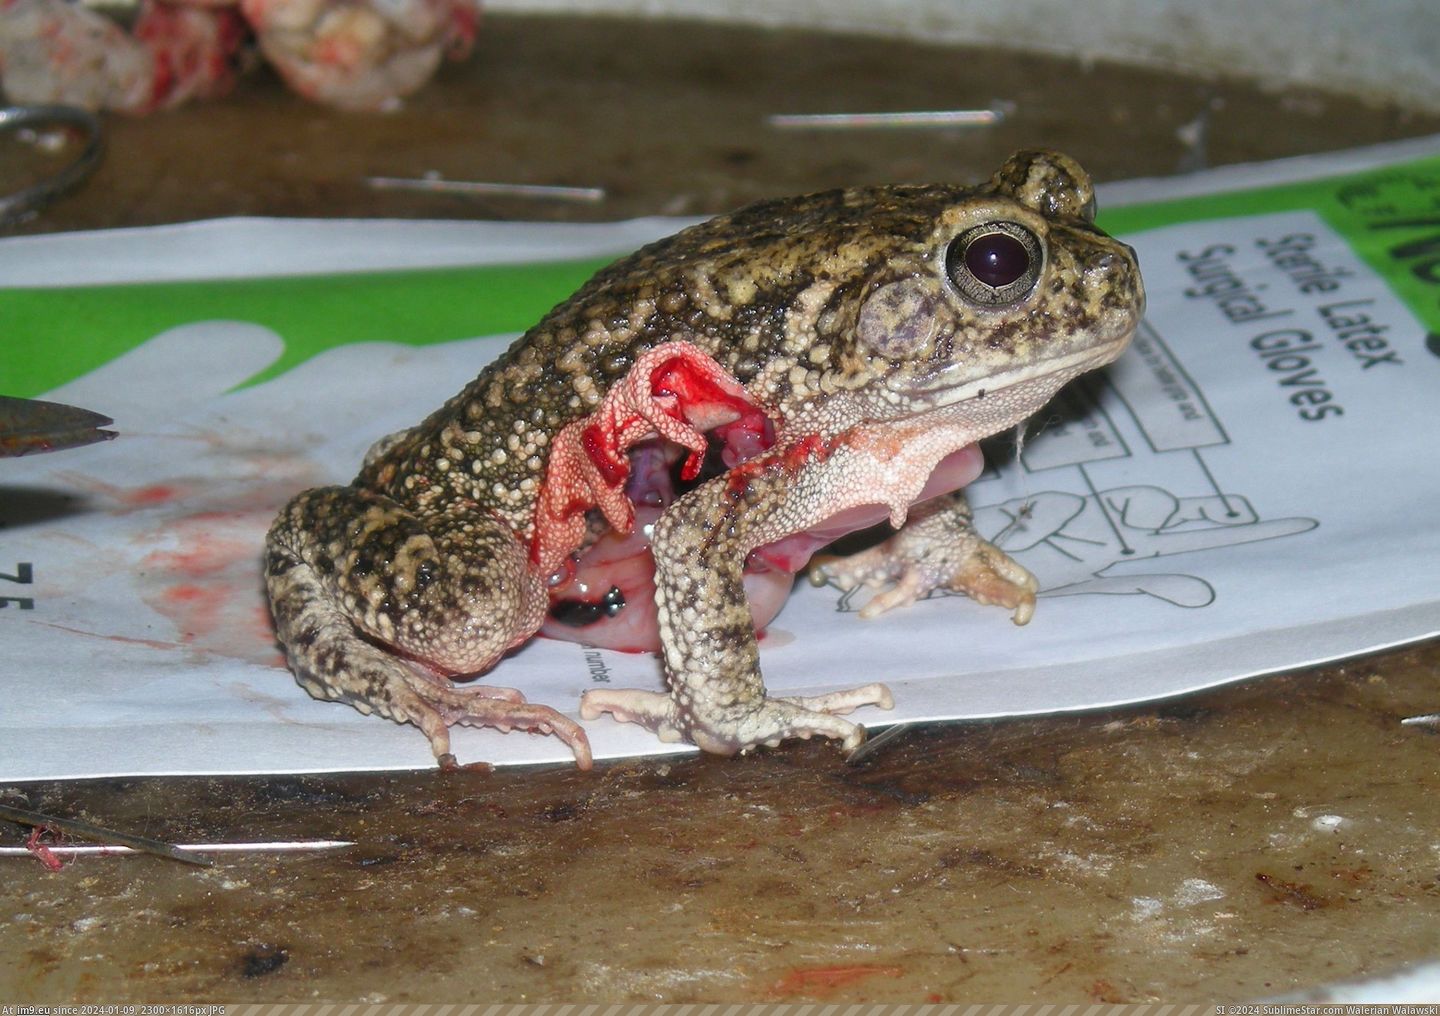 #Wtf #Sleep #Frog #Chloroform #Vivisected #Wikipedia #Induced #Wakes [Wtf] A frog being vivisected wakes up from a chloroform-induced 'sleep.' [From Wikipedia.] Pic. (Bild von album My r/WTF favs))